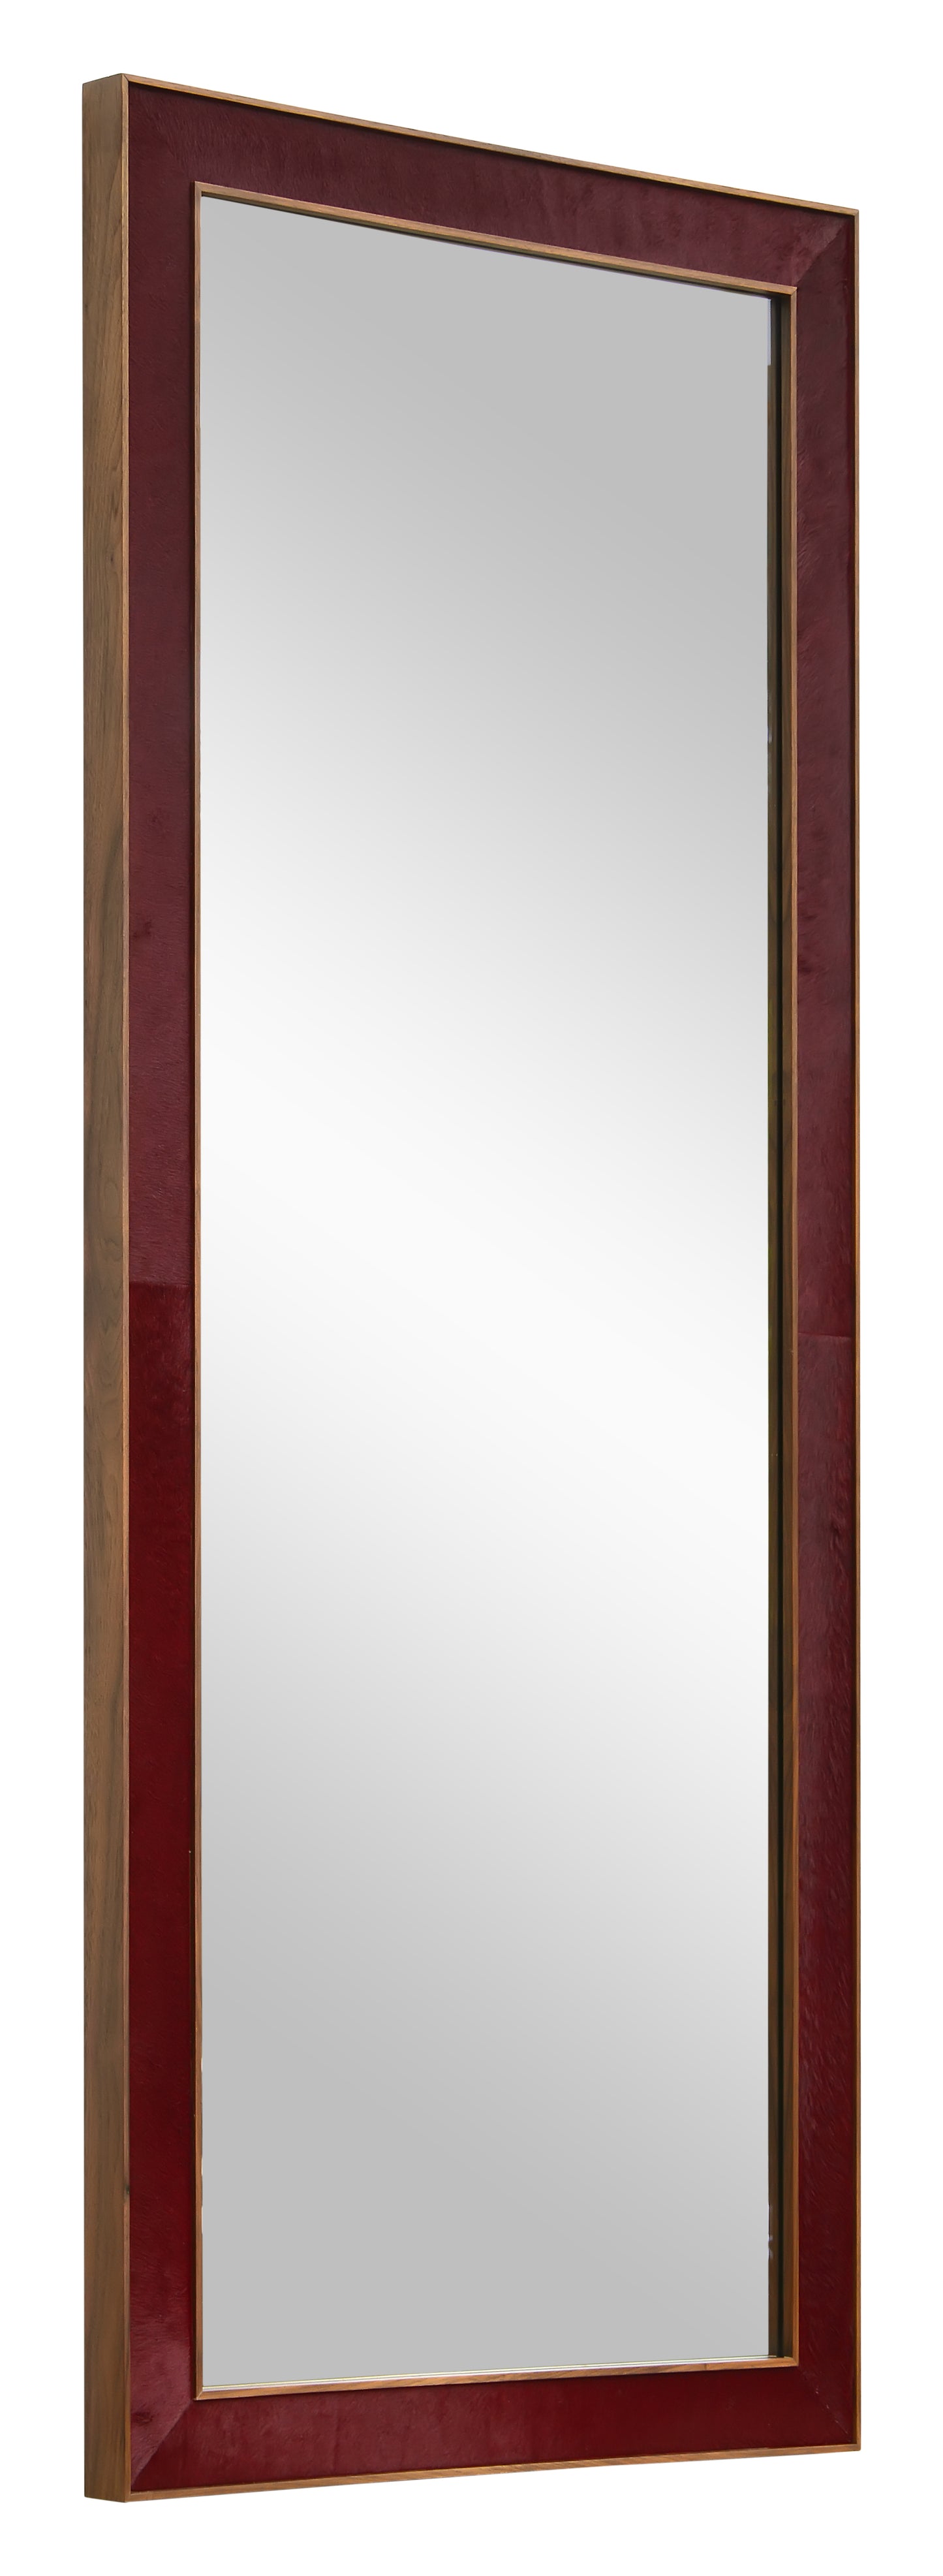 Walnut wood frame mirror